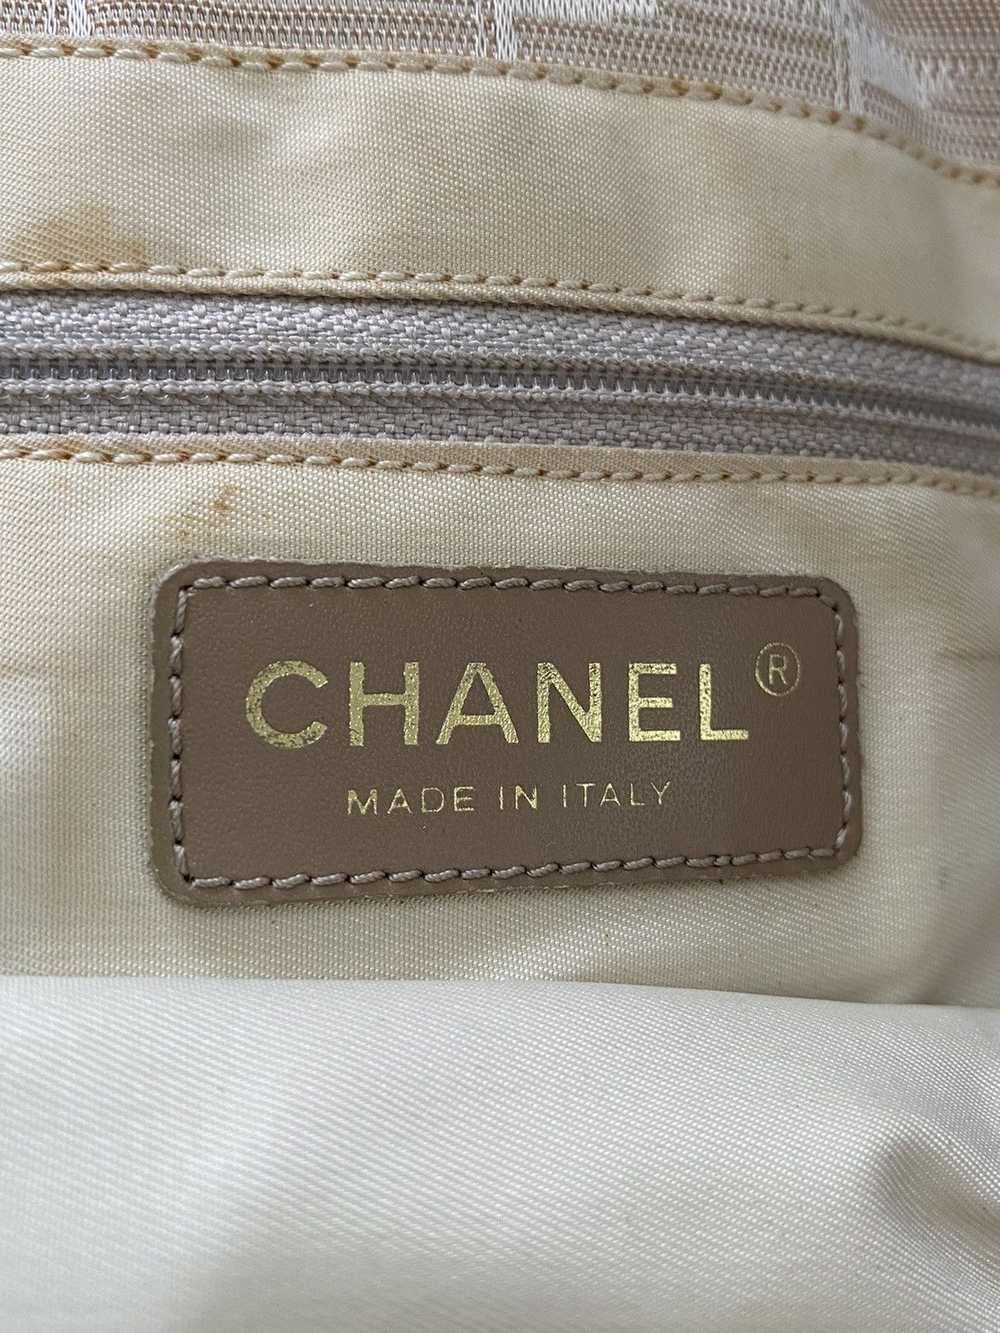 Chanel Chanel CC Sport Canvas Tote Bag - image 11